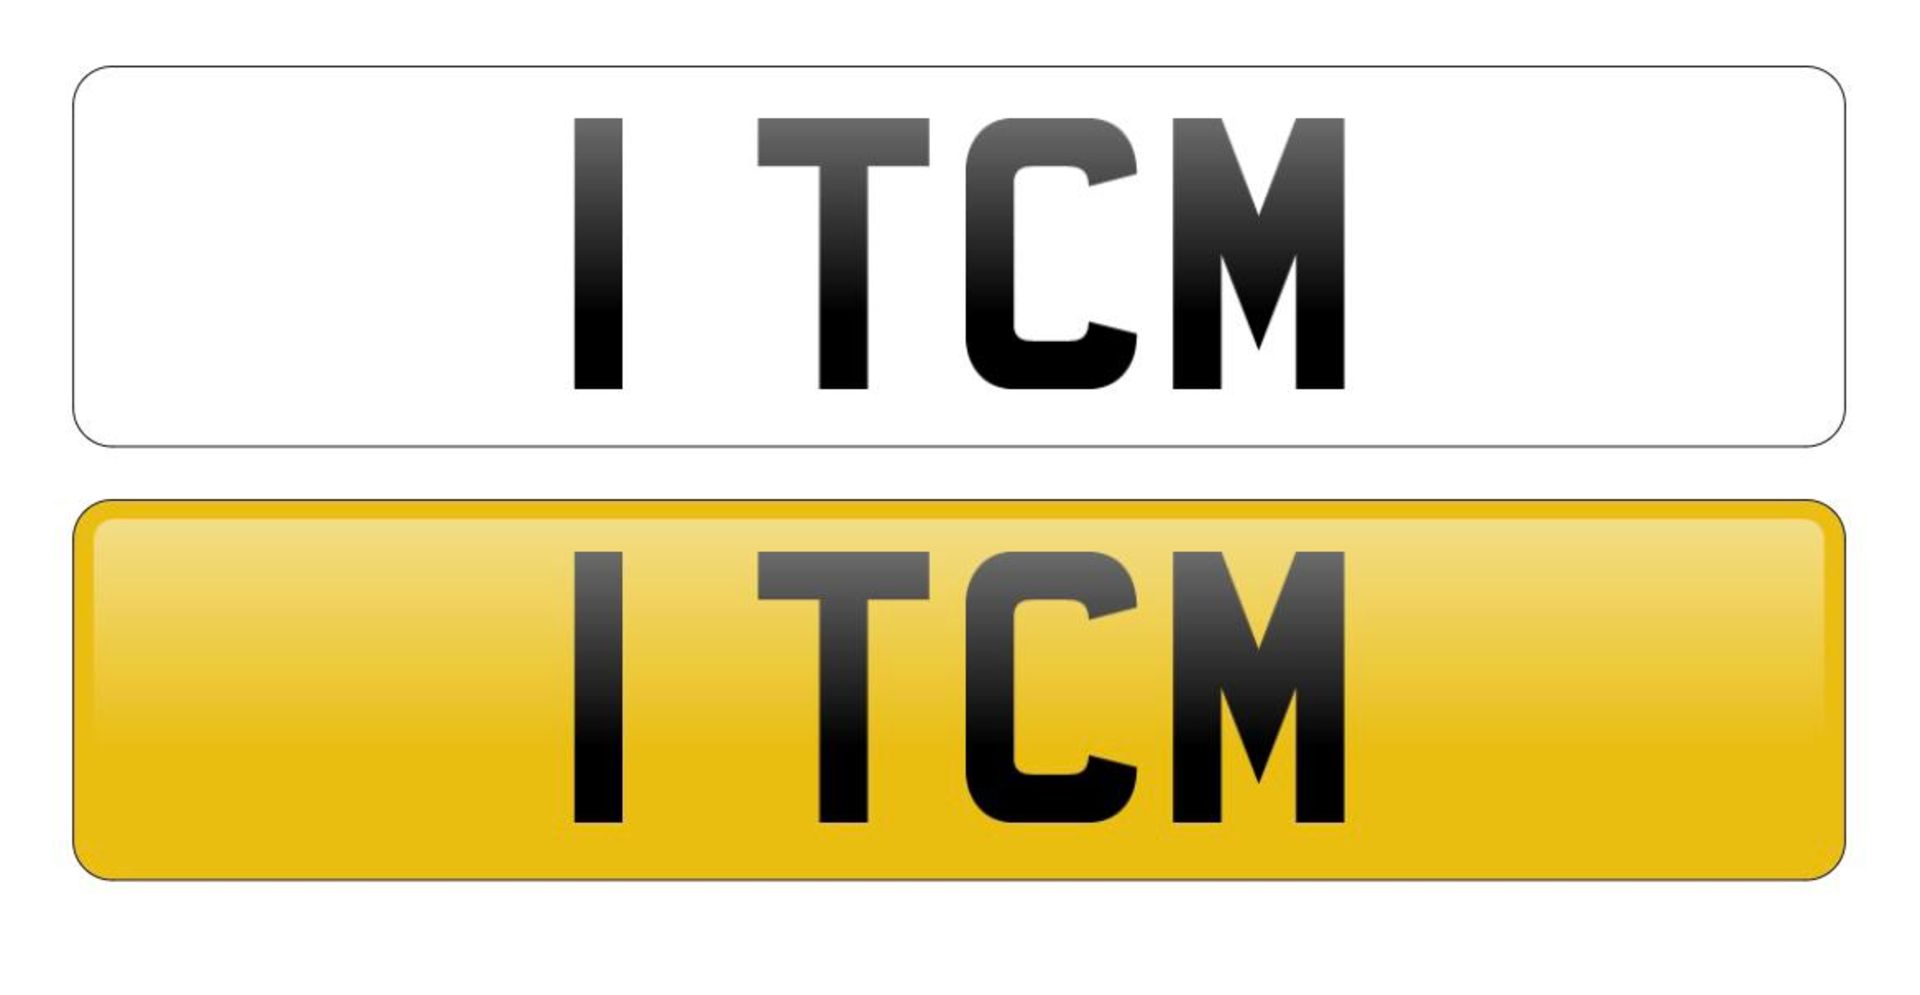 1 TCM vehicle registration plate on retention certificate.